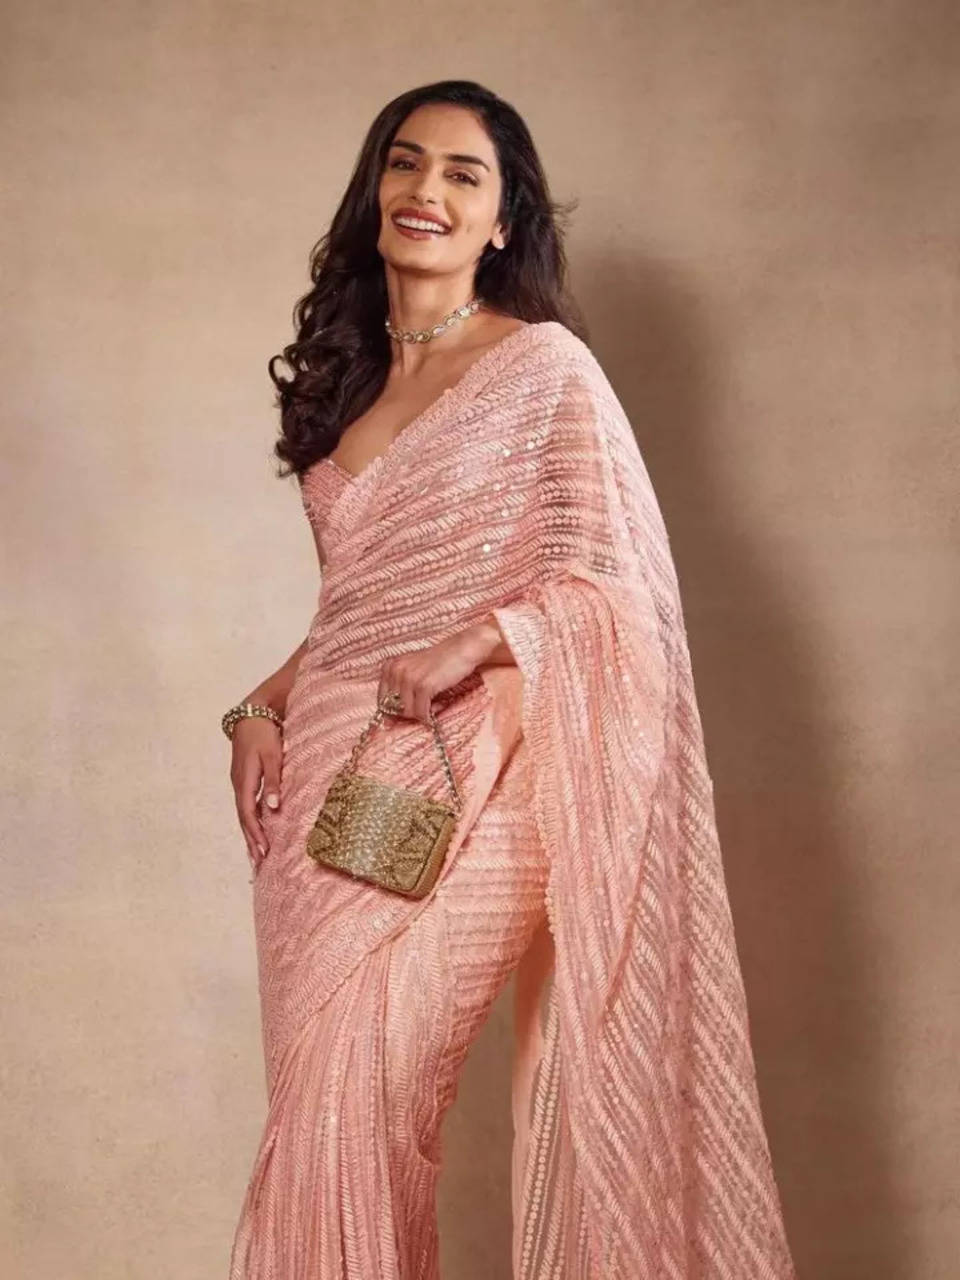 Manushi Chhillar serves a captivating festive look in Rani pink